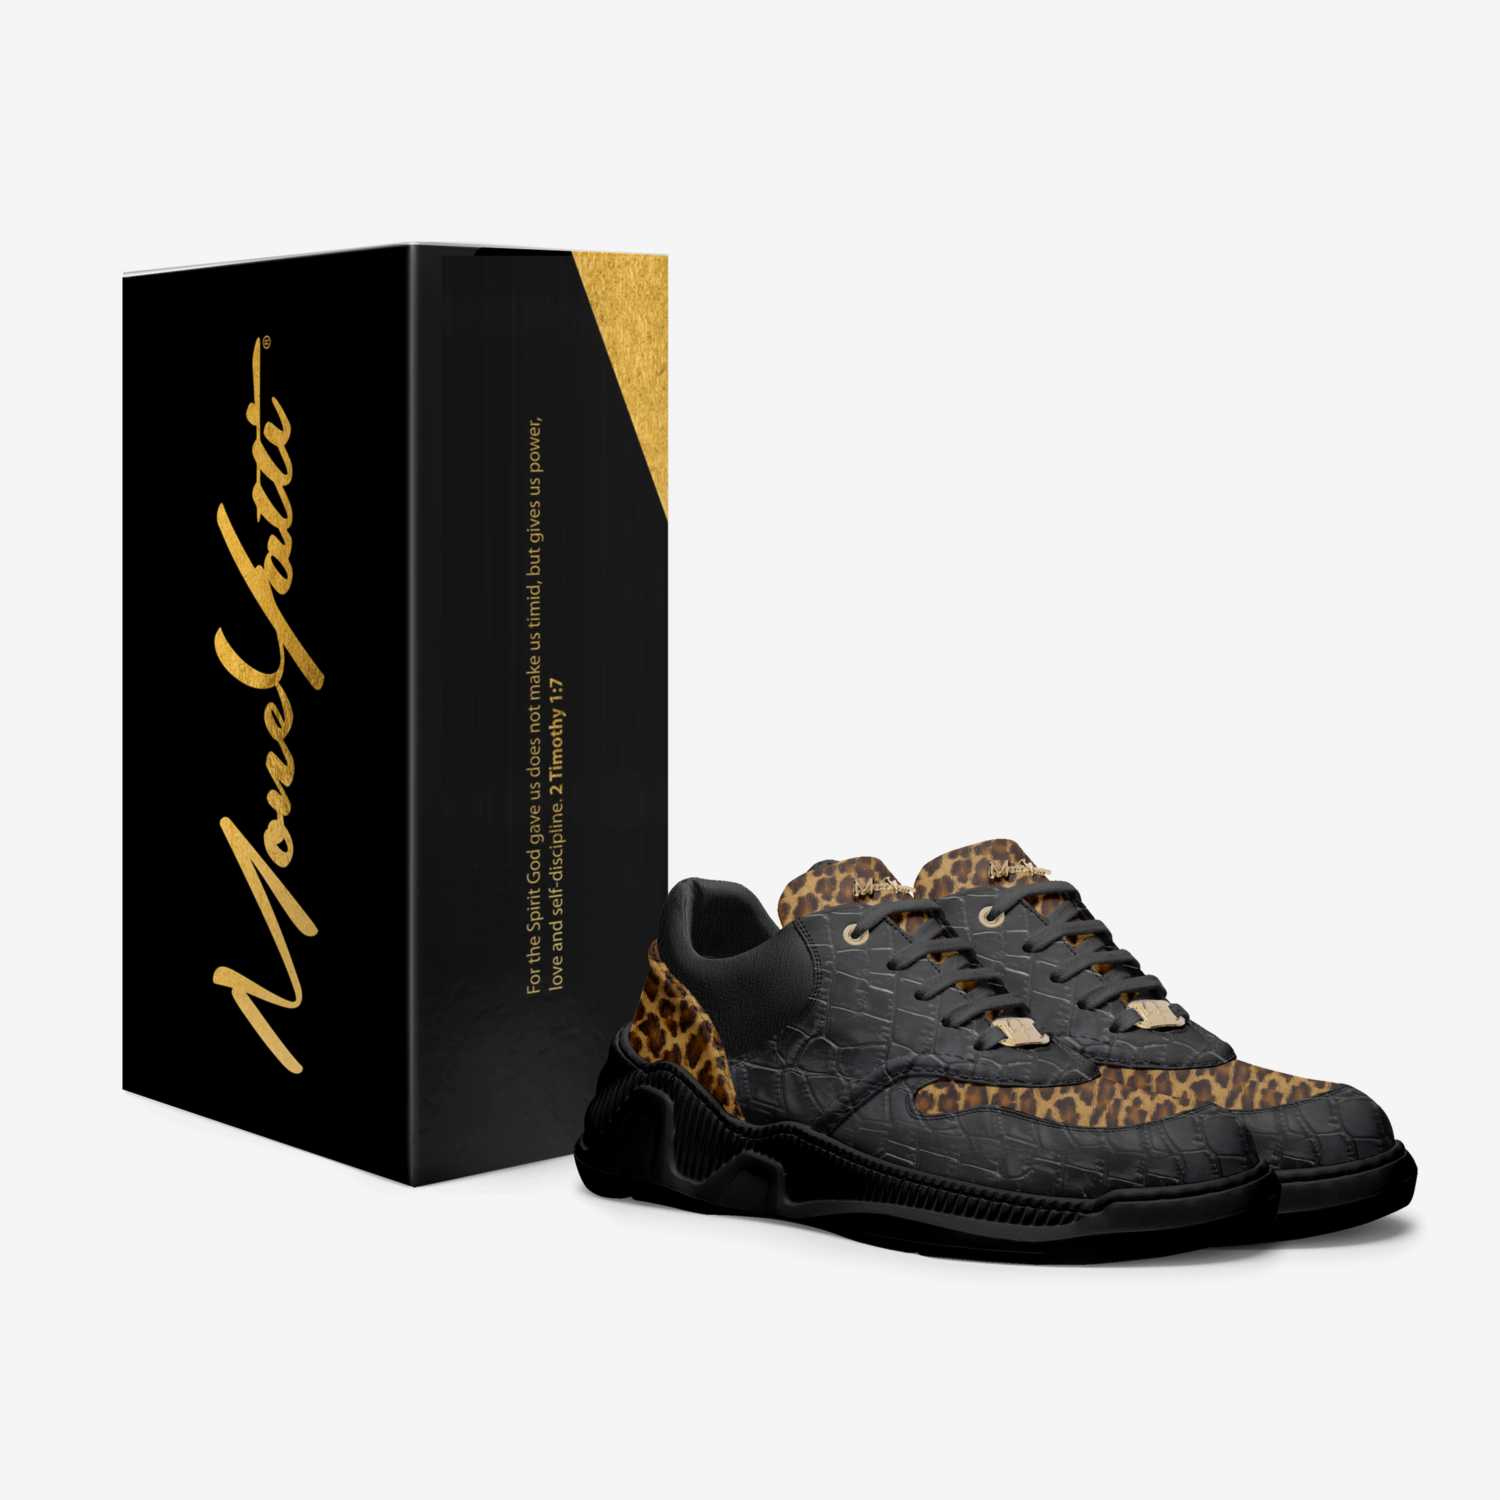 Moneyatti Miller01 custom made in Italy shoes by Moneyatti Brand | Box view